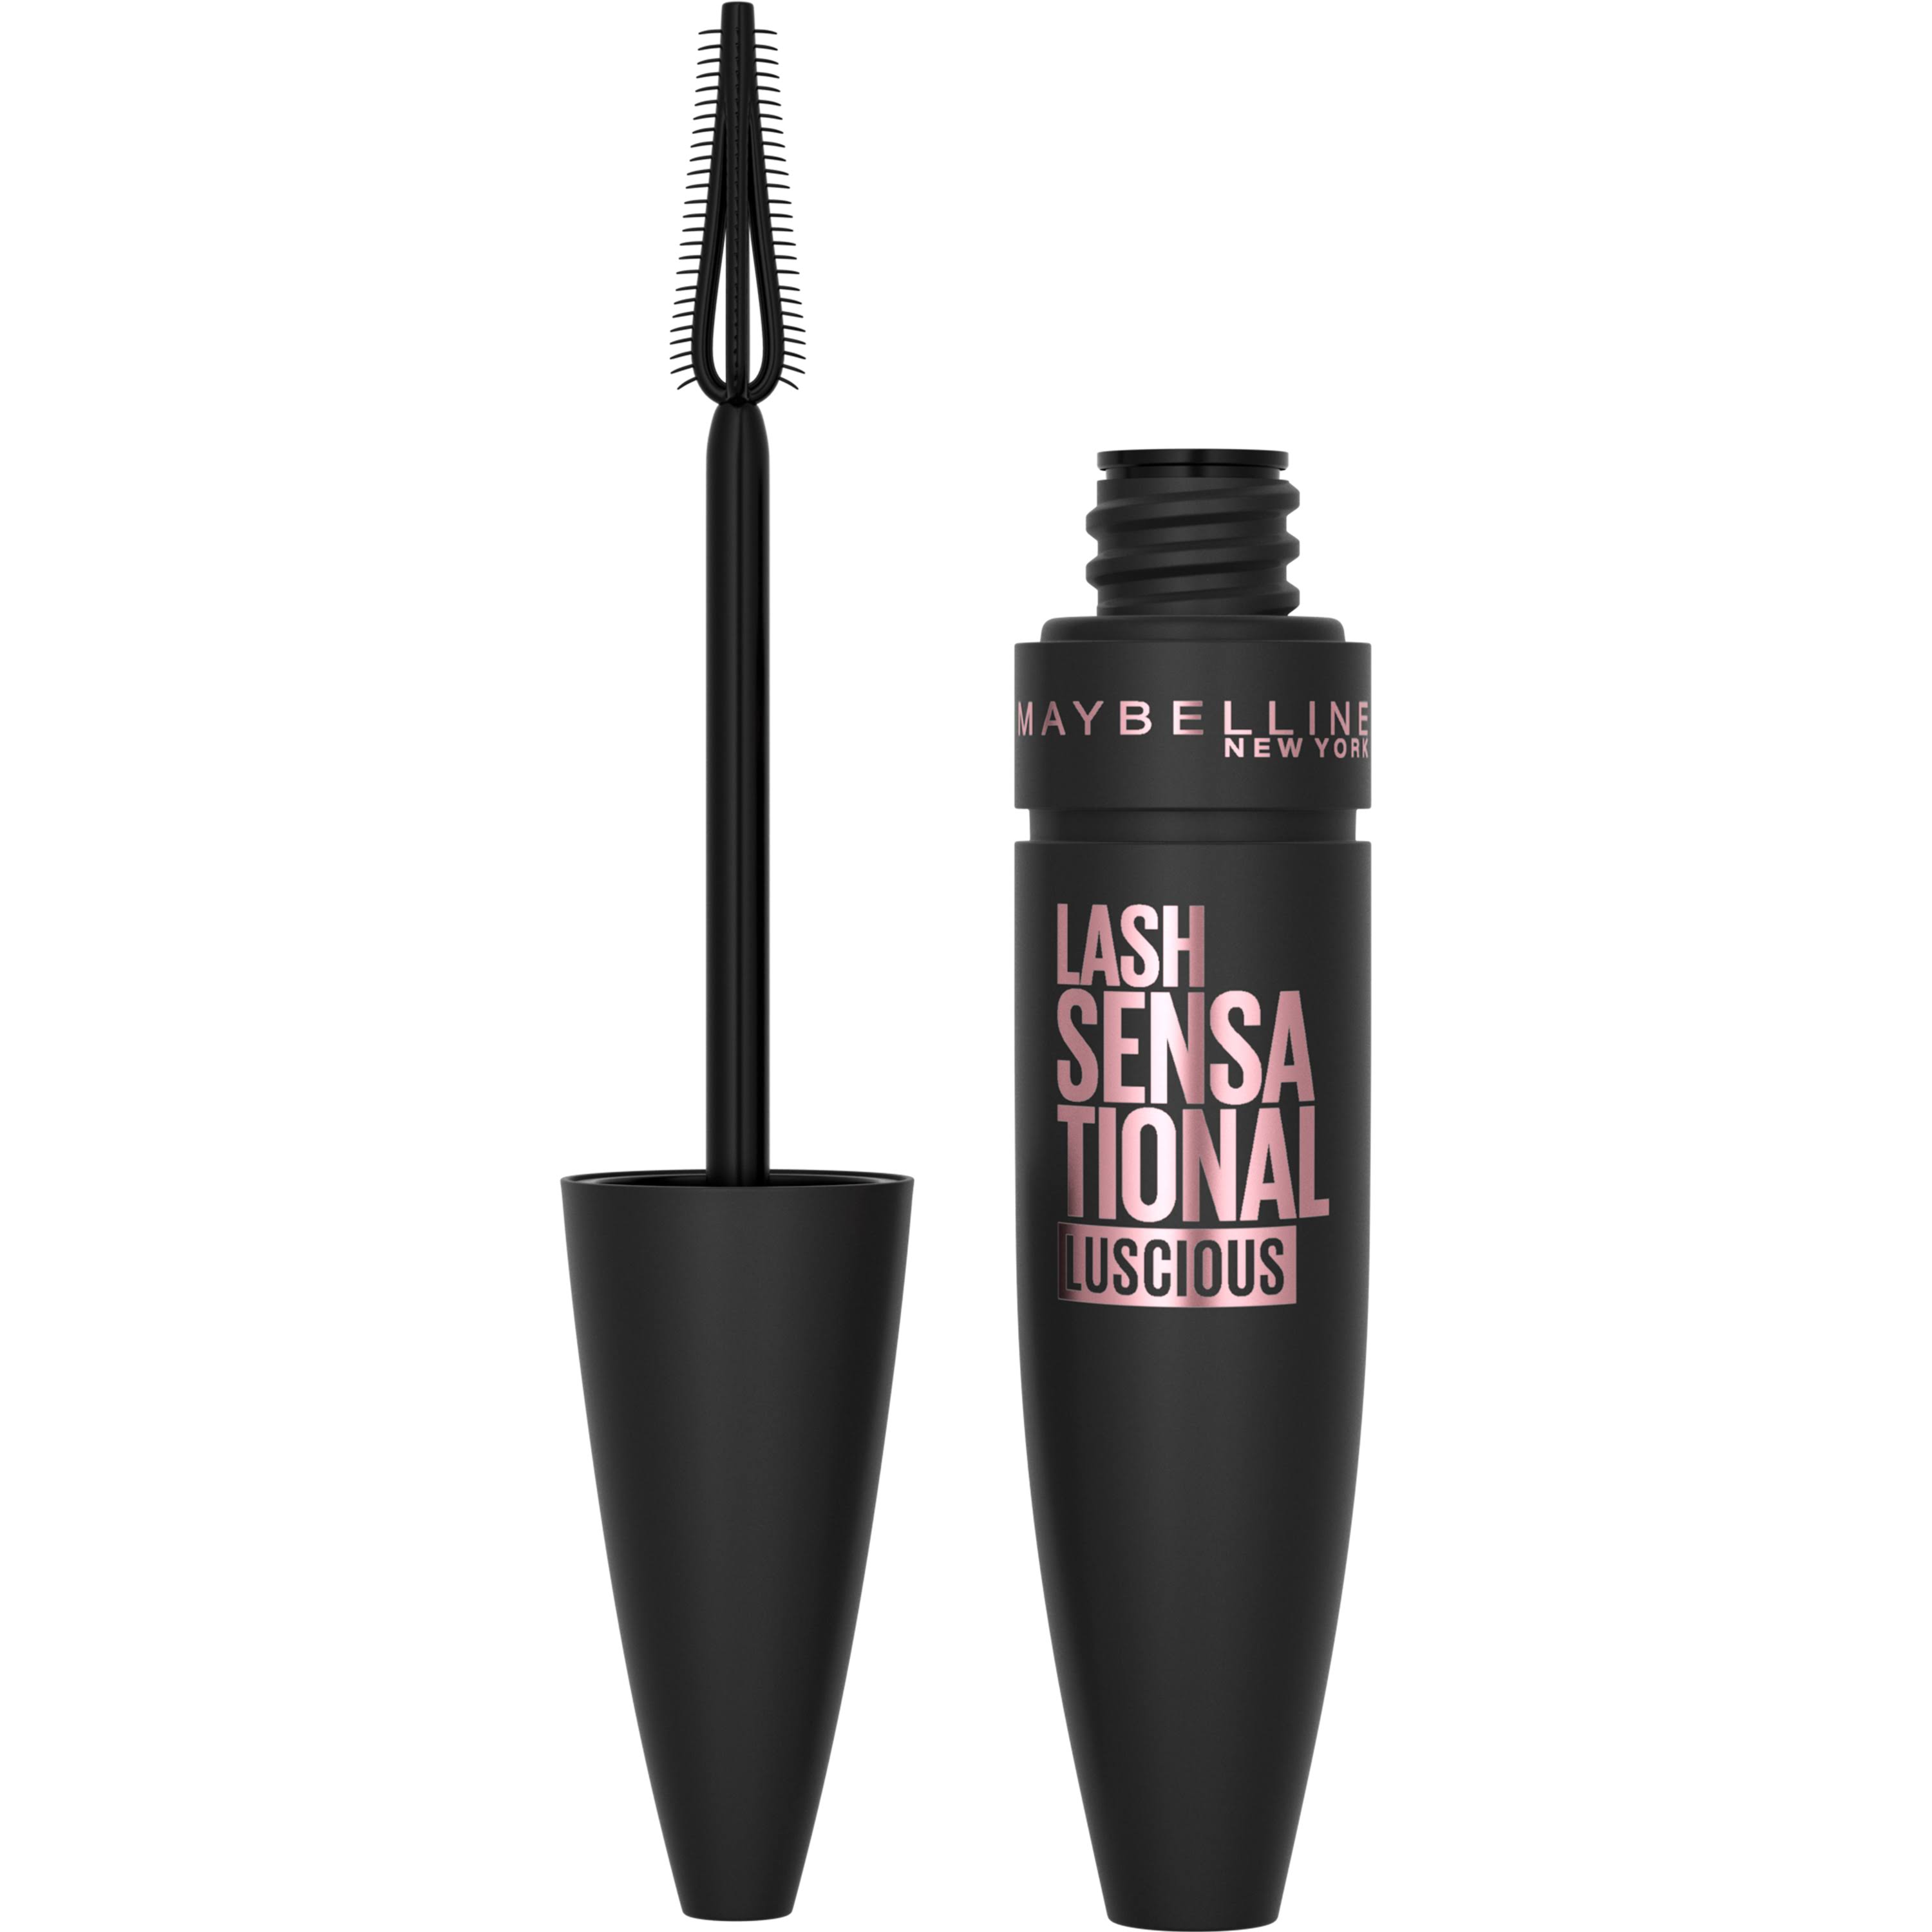 Maybelline Lash Sensational Luscious Washable Mascara - Blackest Black, 0.32 fl oz